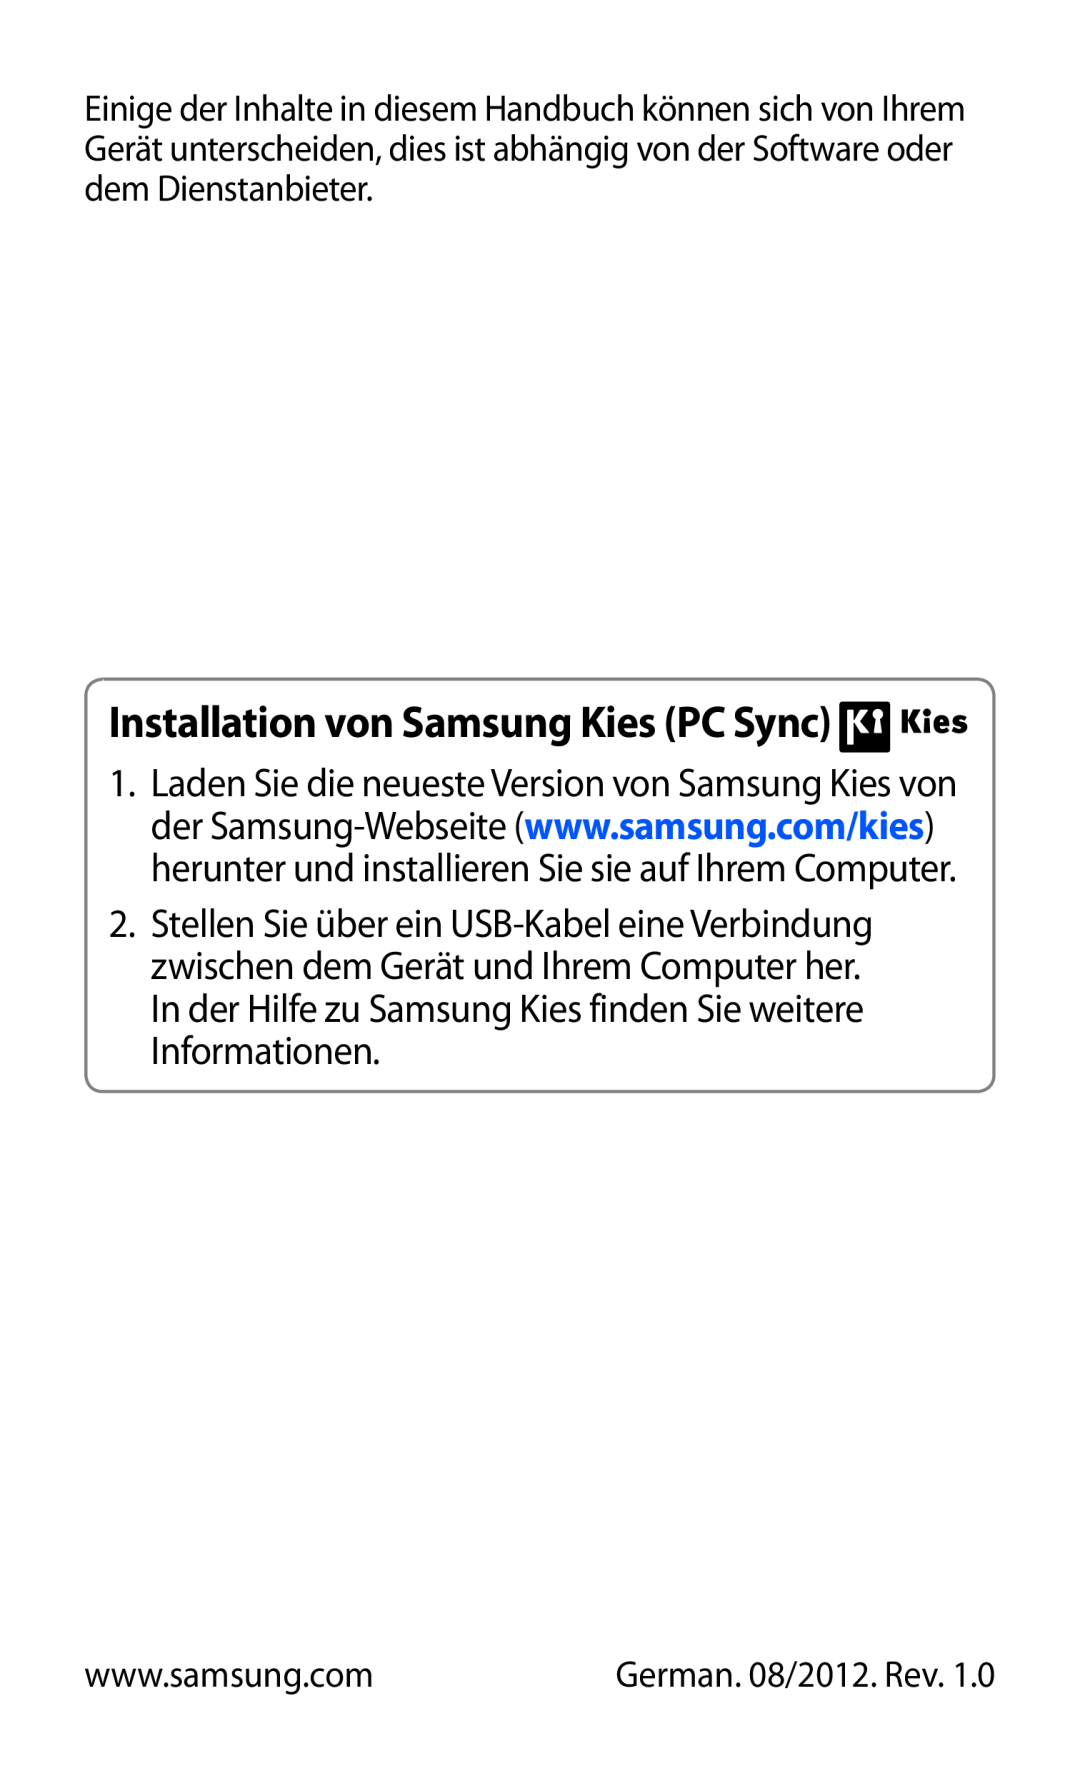 Samsung GT-P7511UWDDBT, GT-P7511UWEDBT, GT-P7511FKADBT manual Installation von Samsung Kies PC Sync, German. 08/2012. Rev 